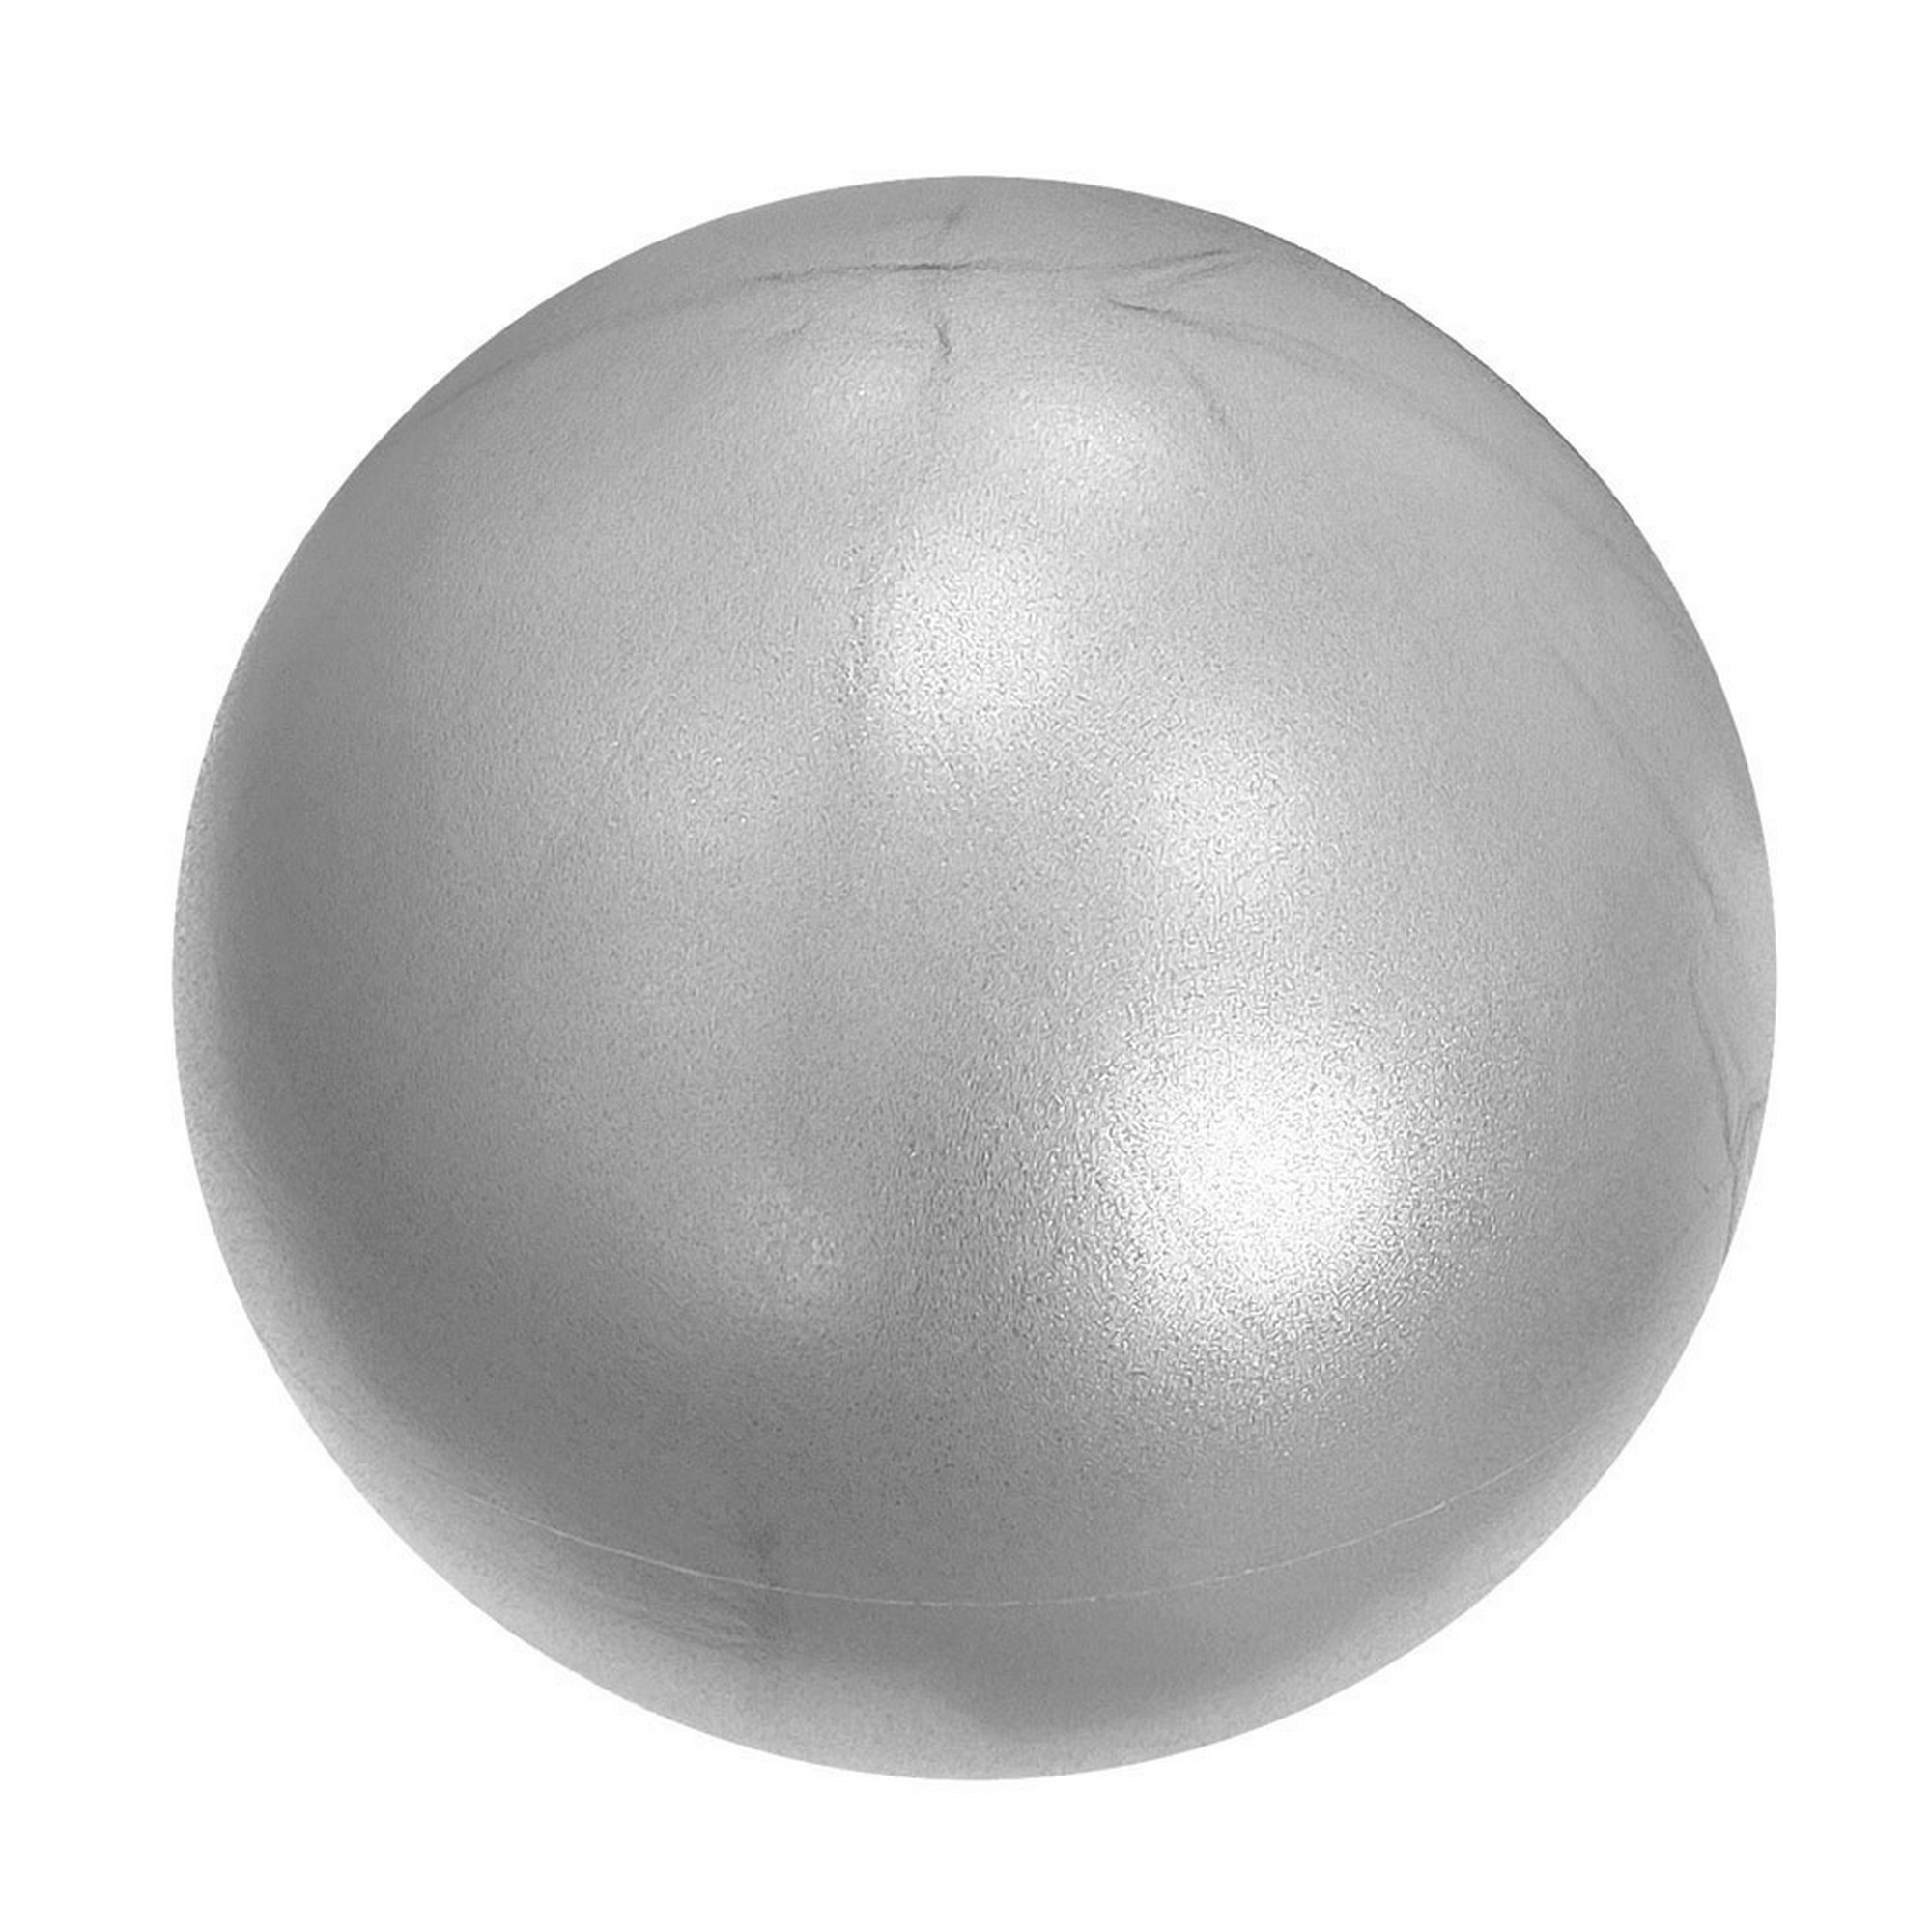 Мяч для пилатеса d25 см Sportex E39139 серебро - фото 1